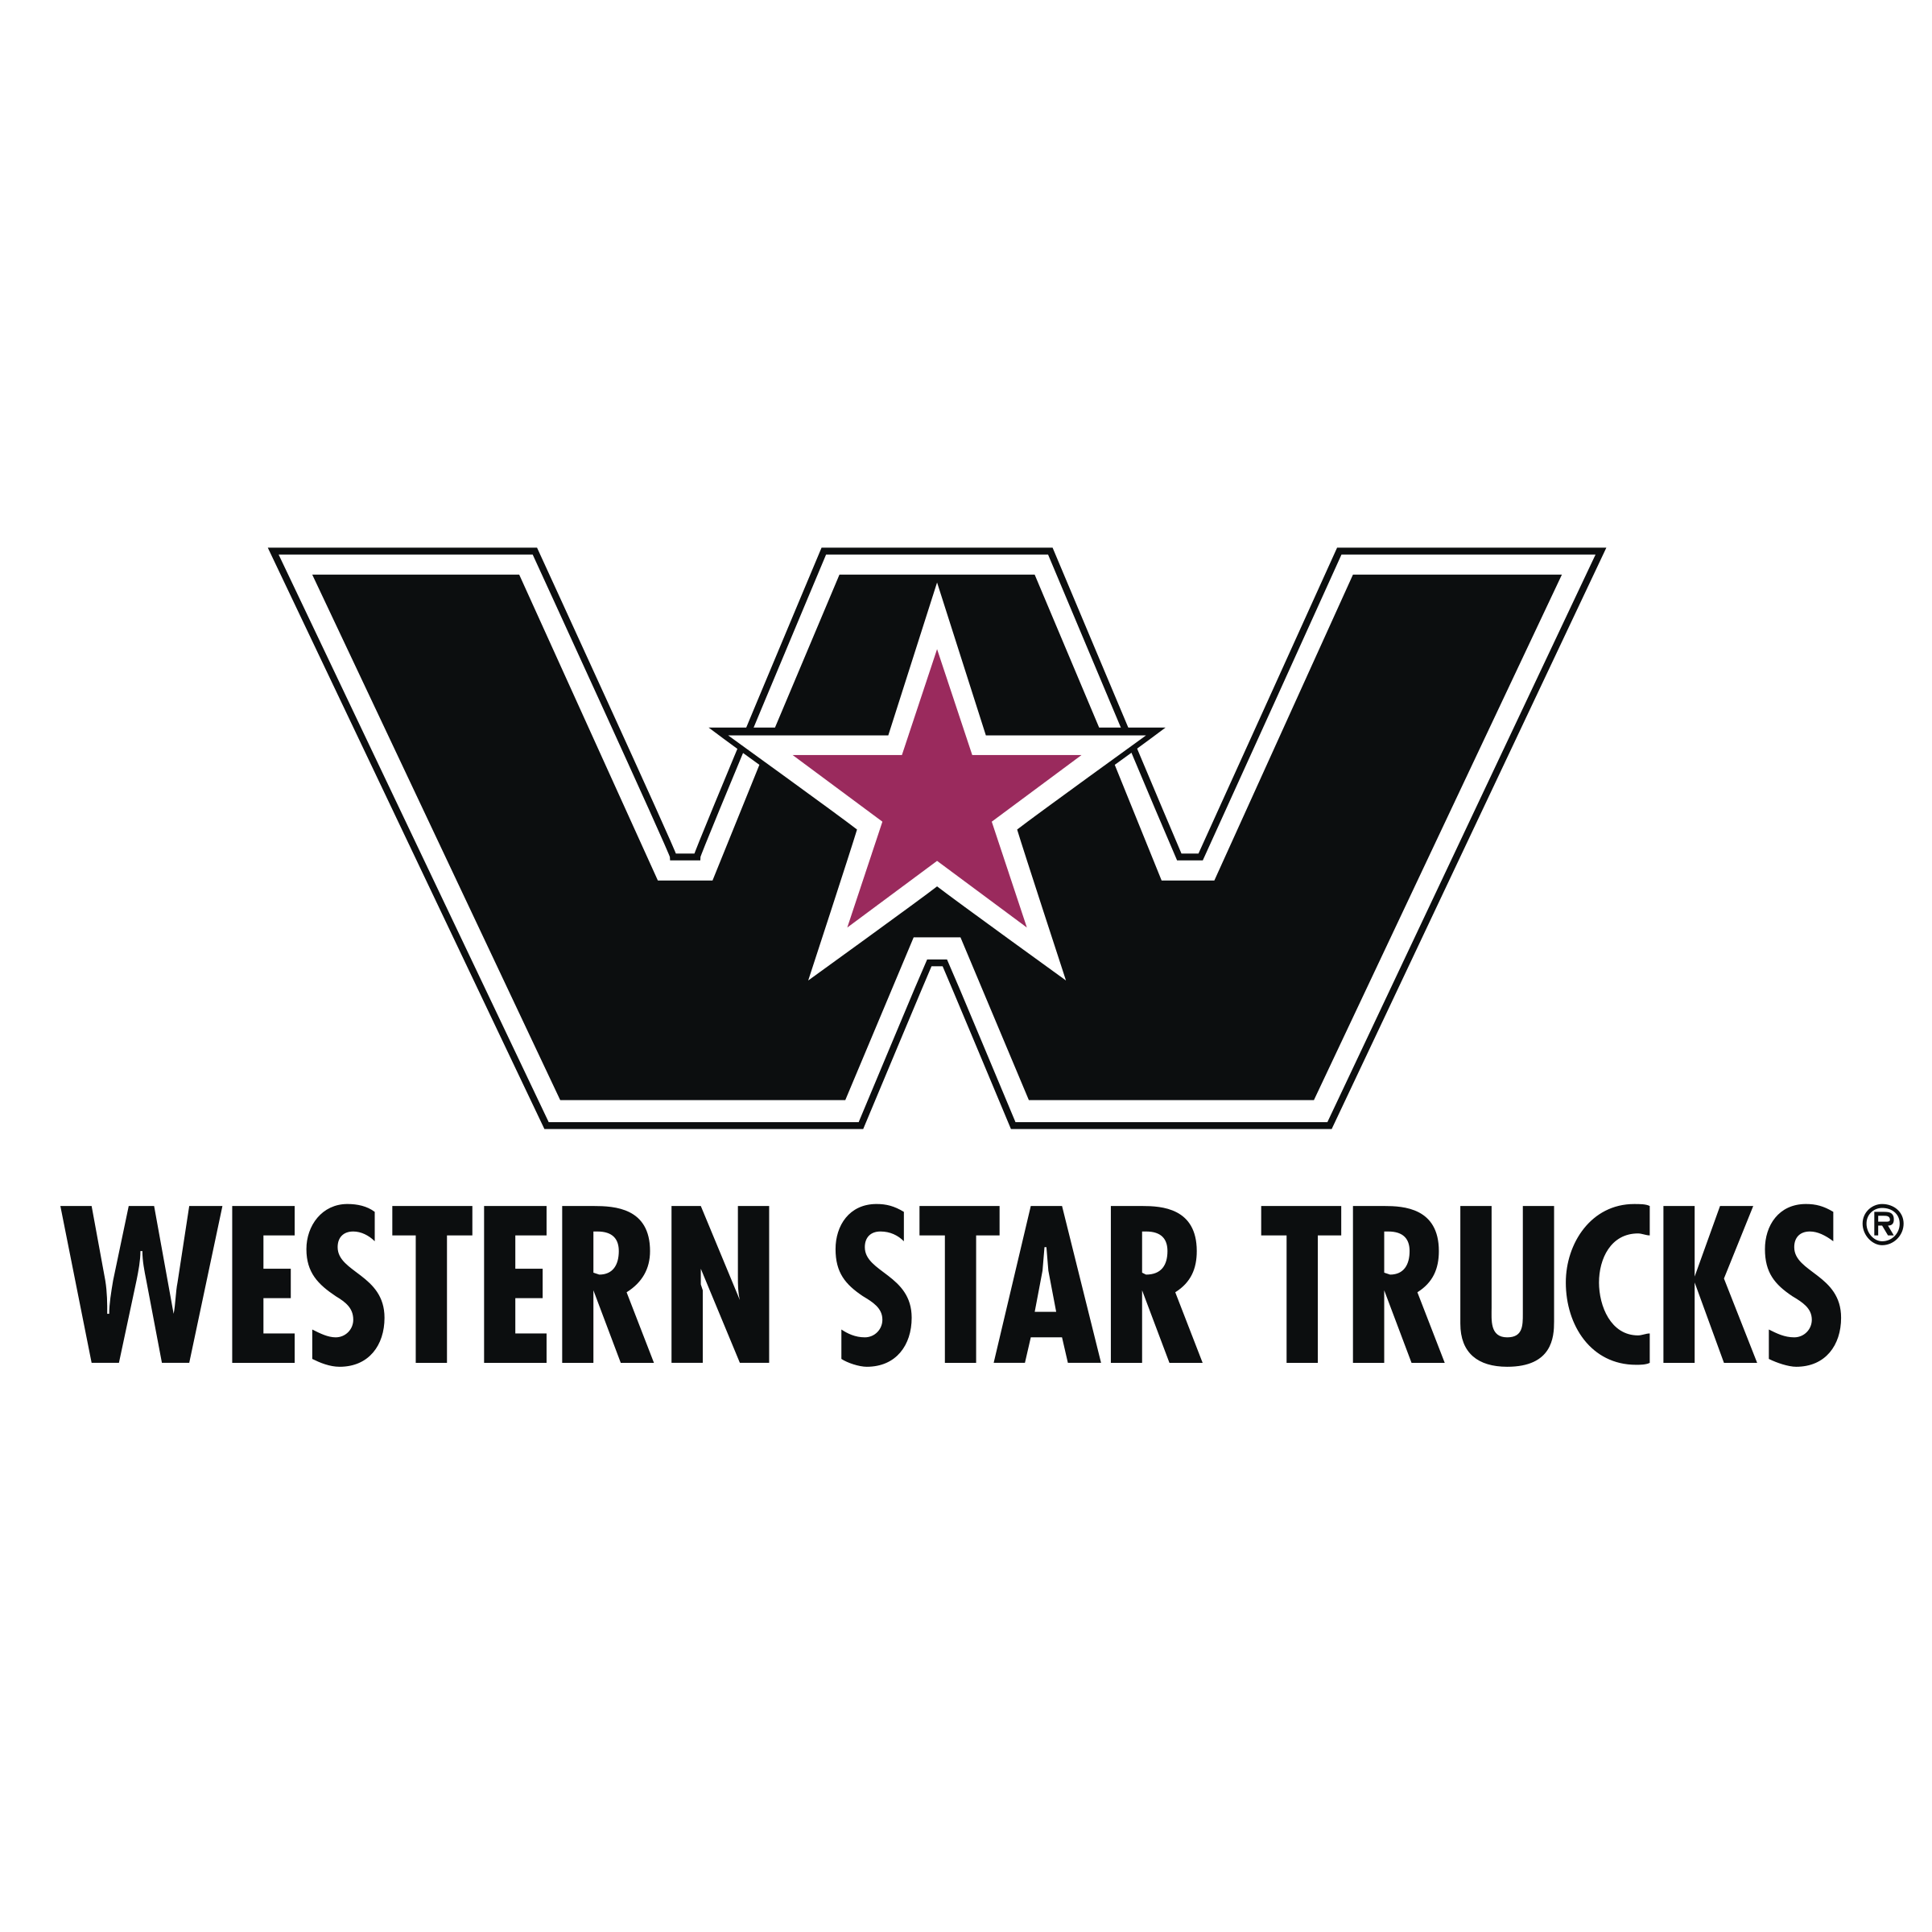 Black and White Western Star Logo - Western Star Trucks Logo PNG Transparent & SVG Vector